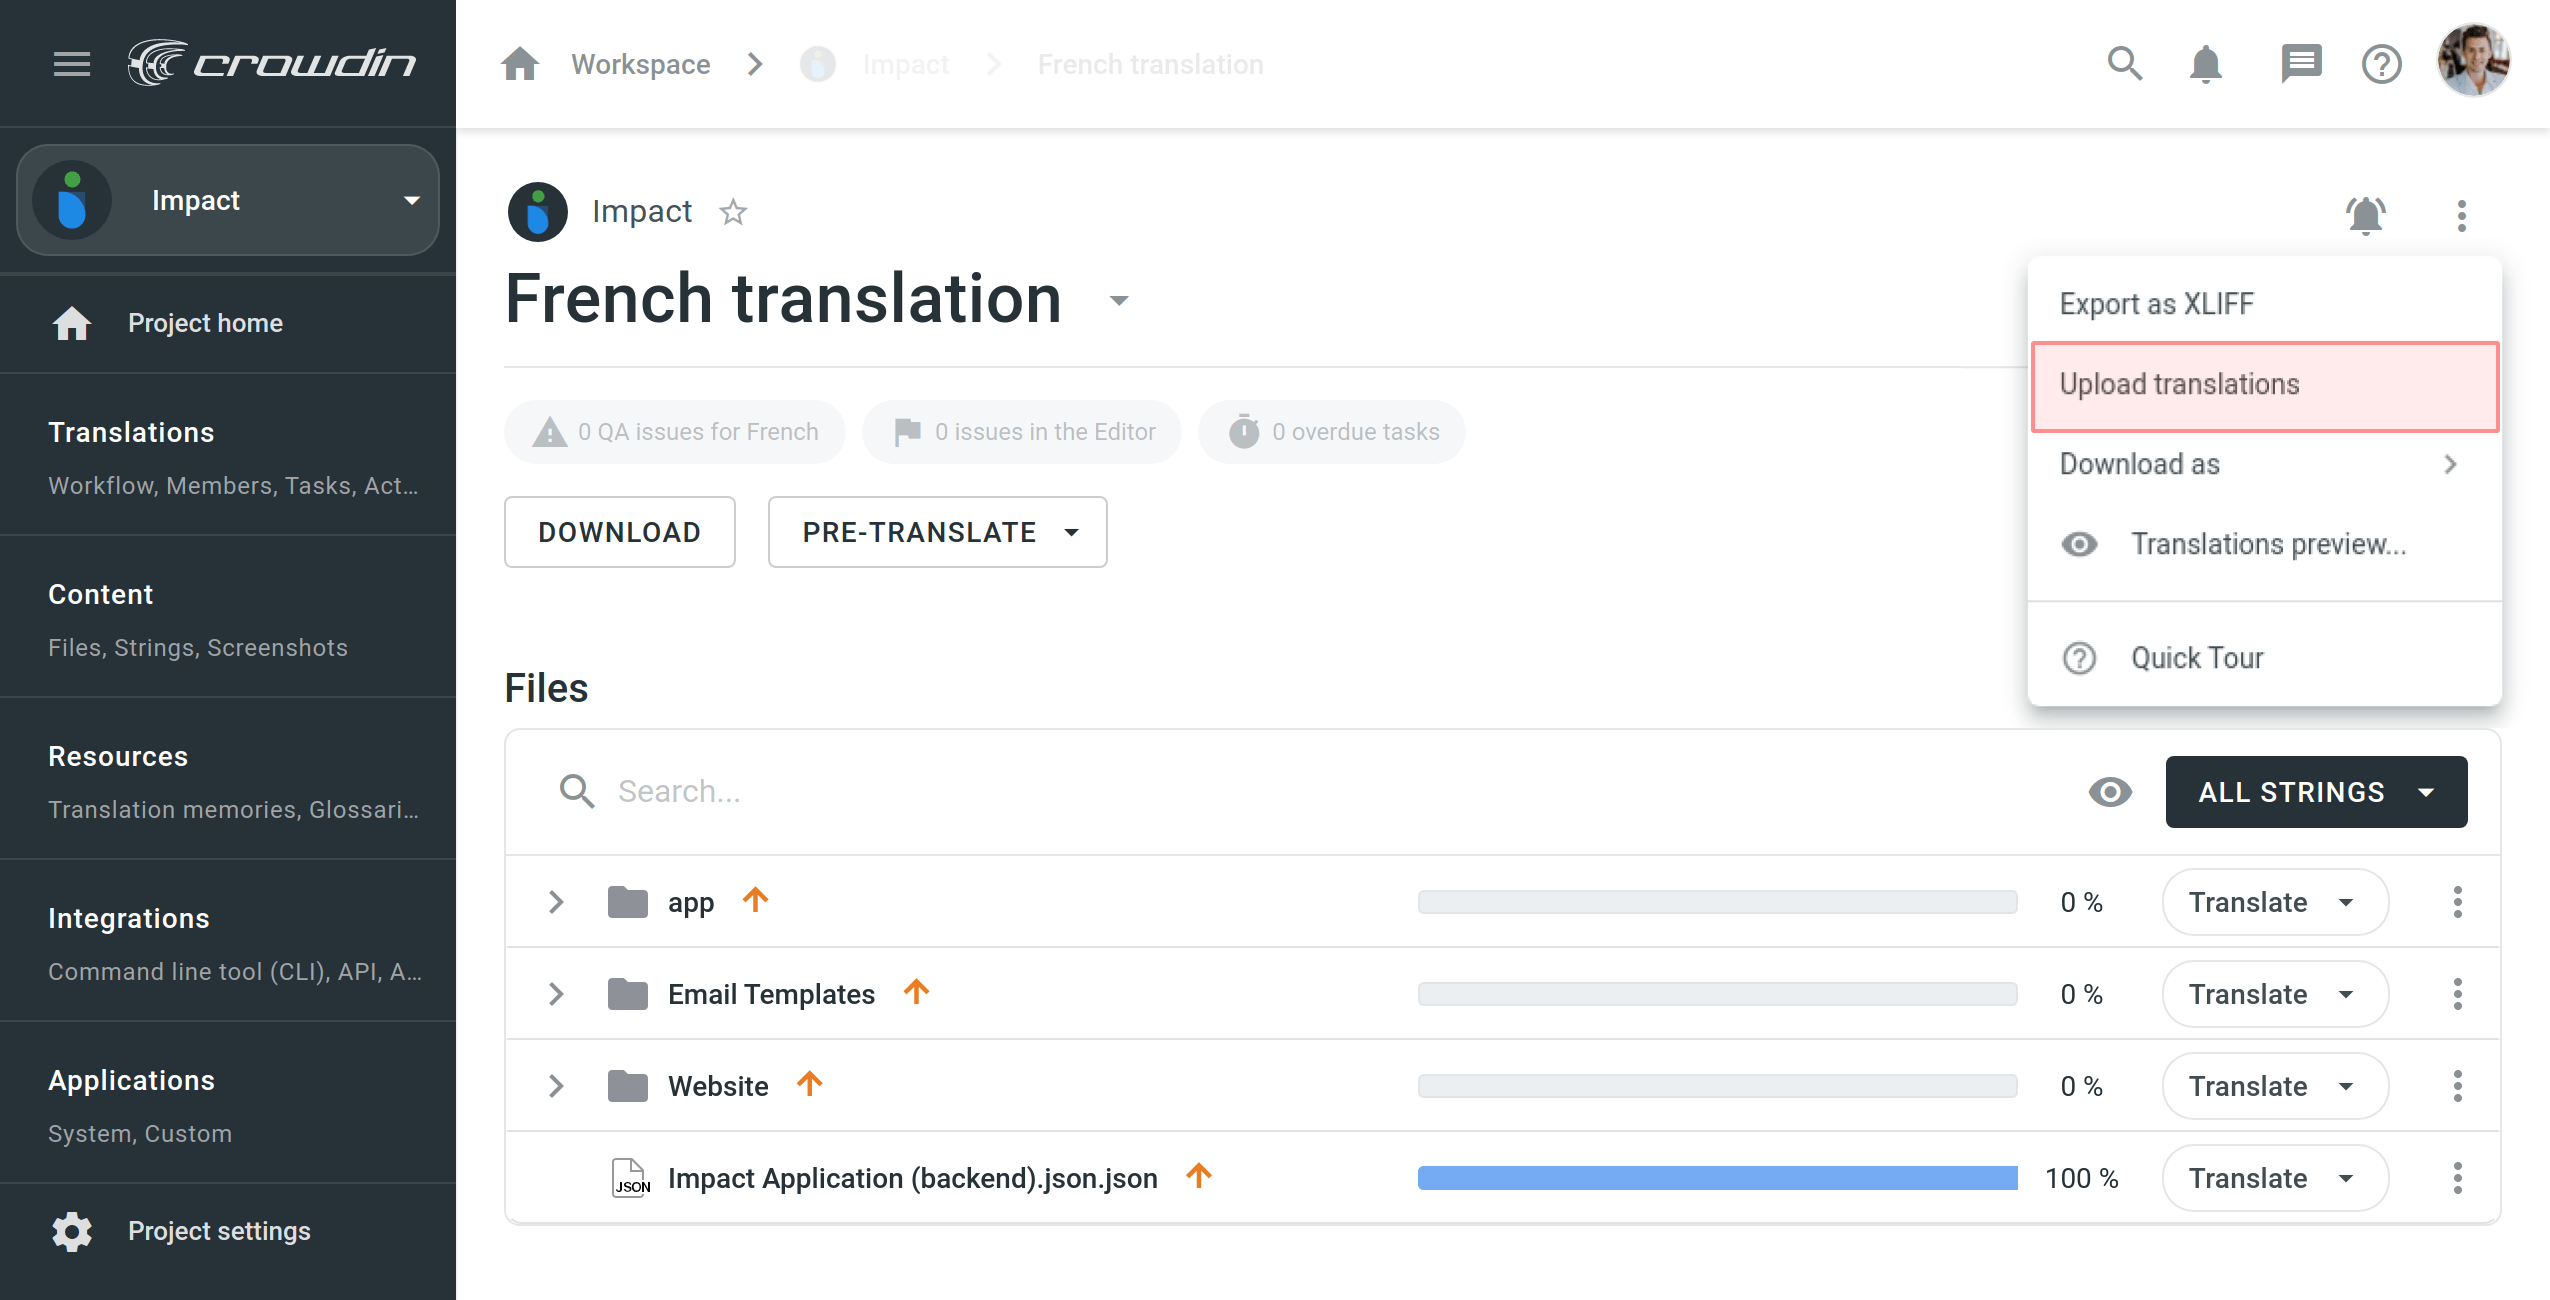 Upload Translations